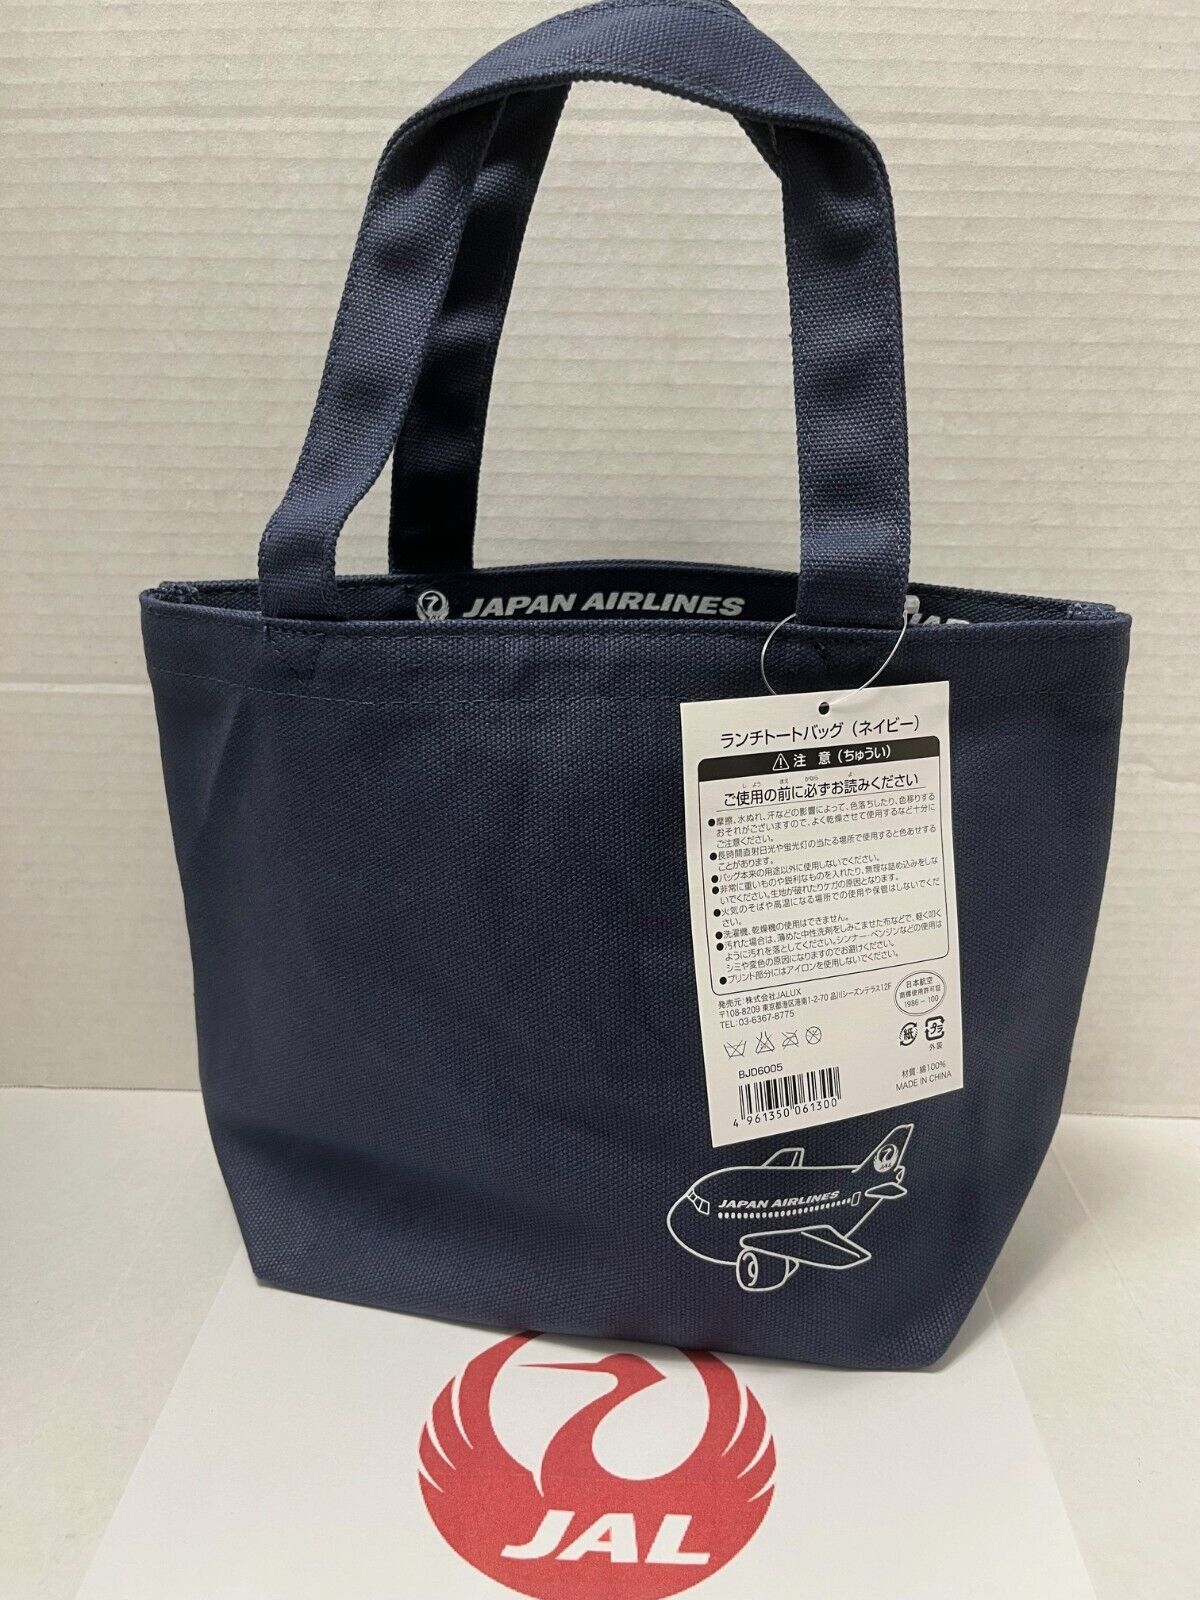 JAL JAPAN AIRLINES Mini Shopper Canvas Tote Bag NWT